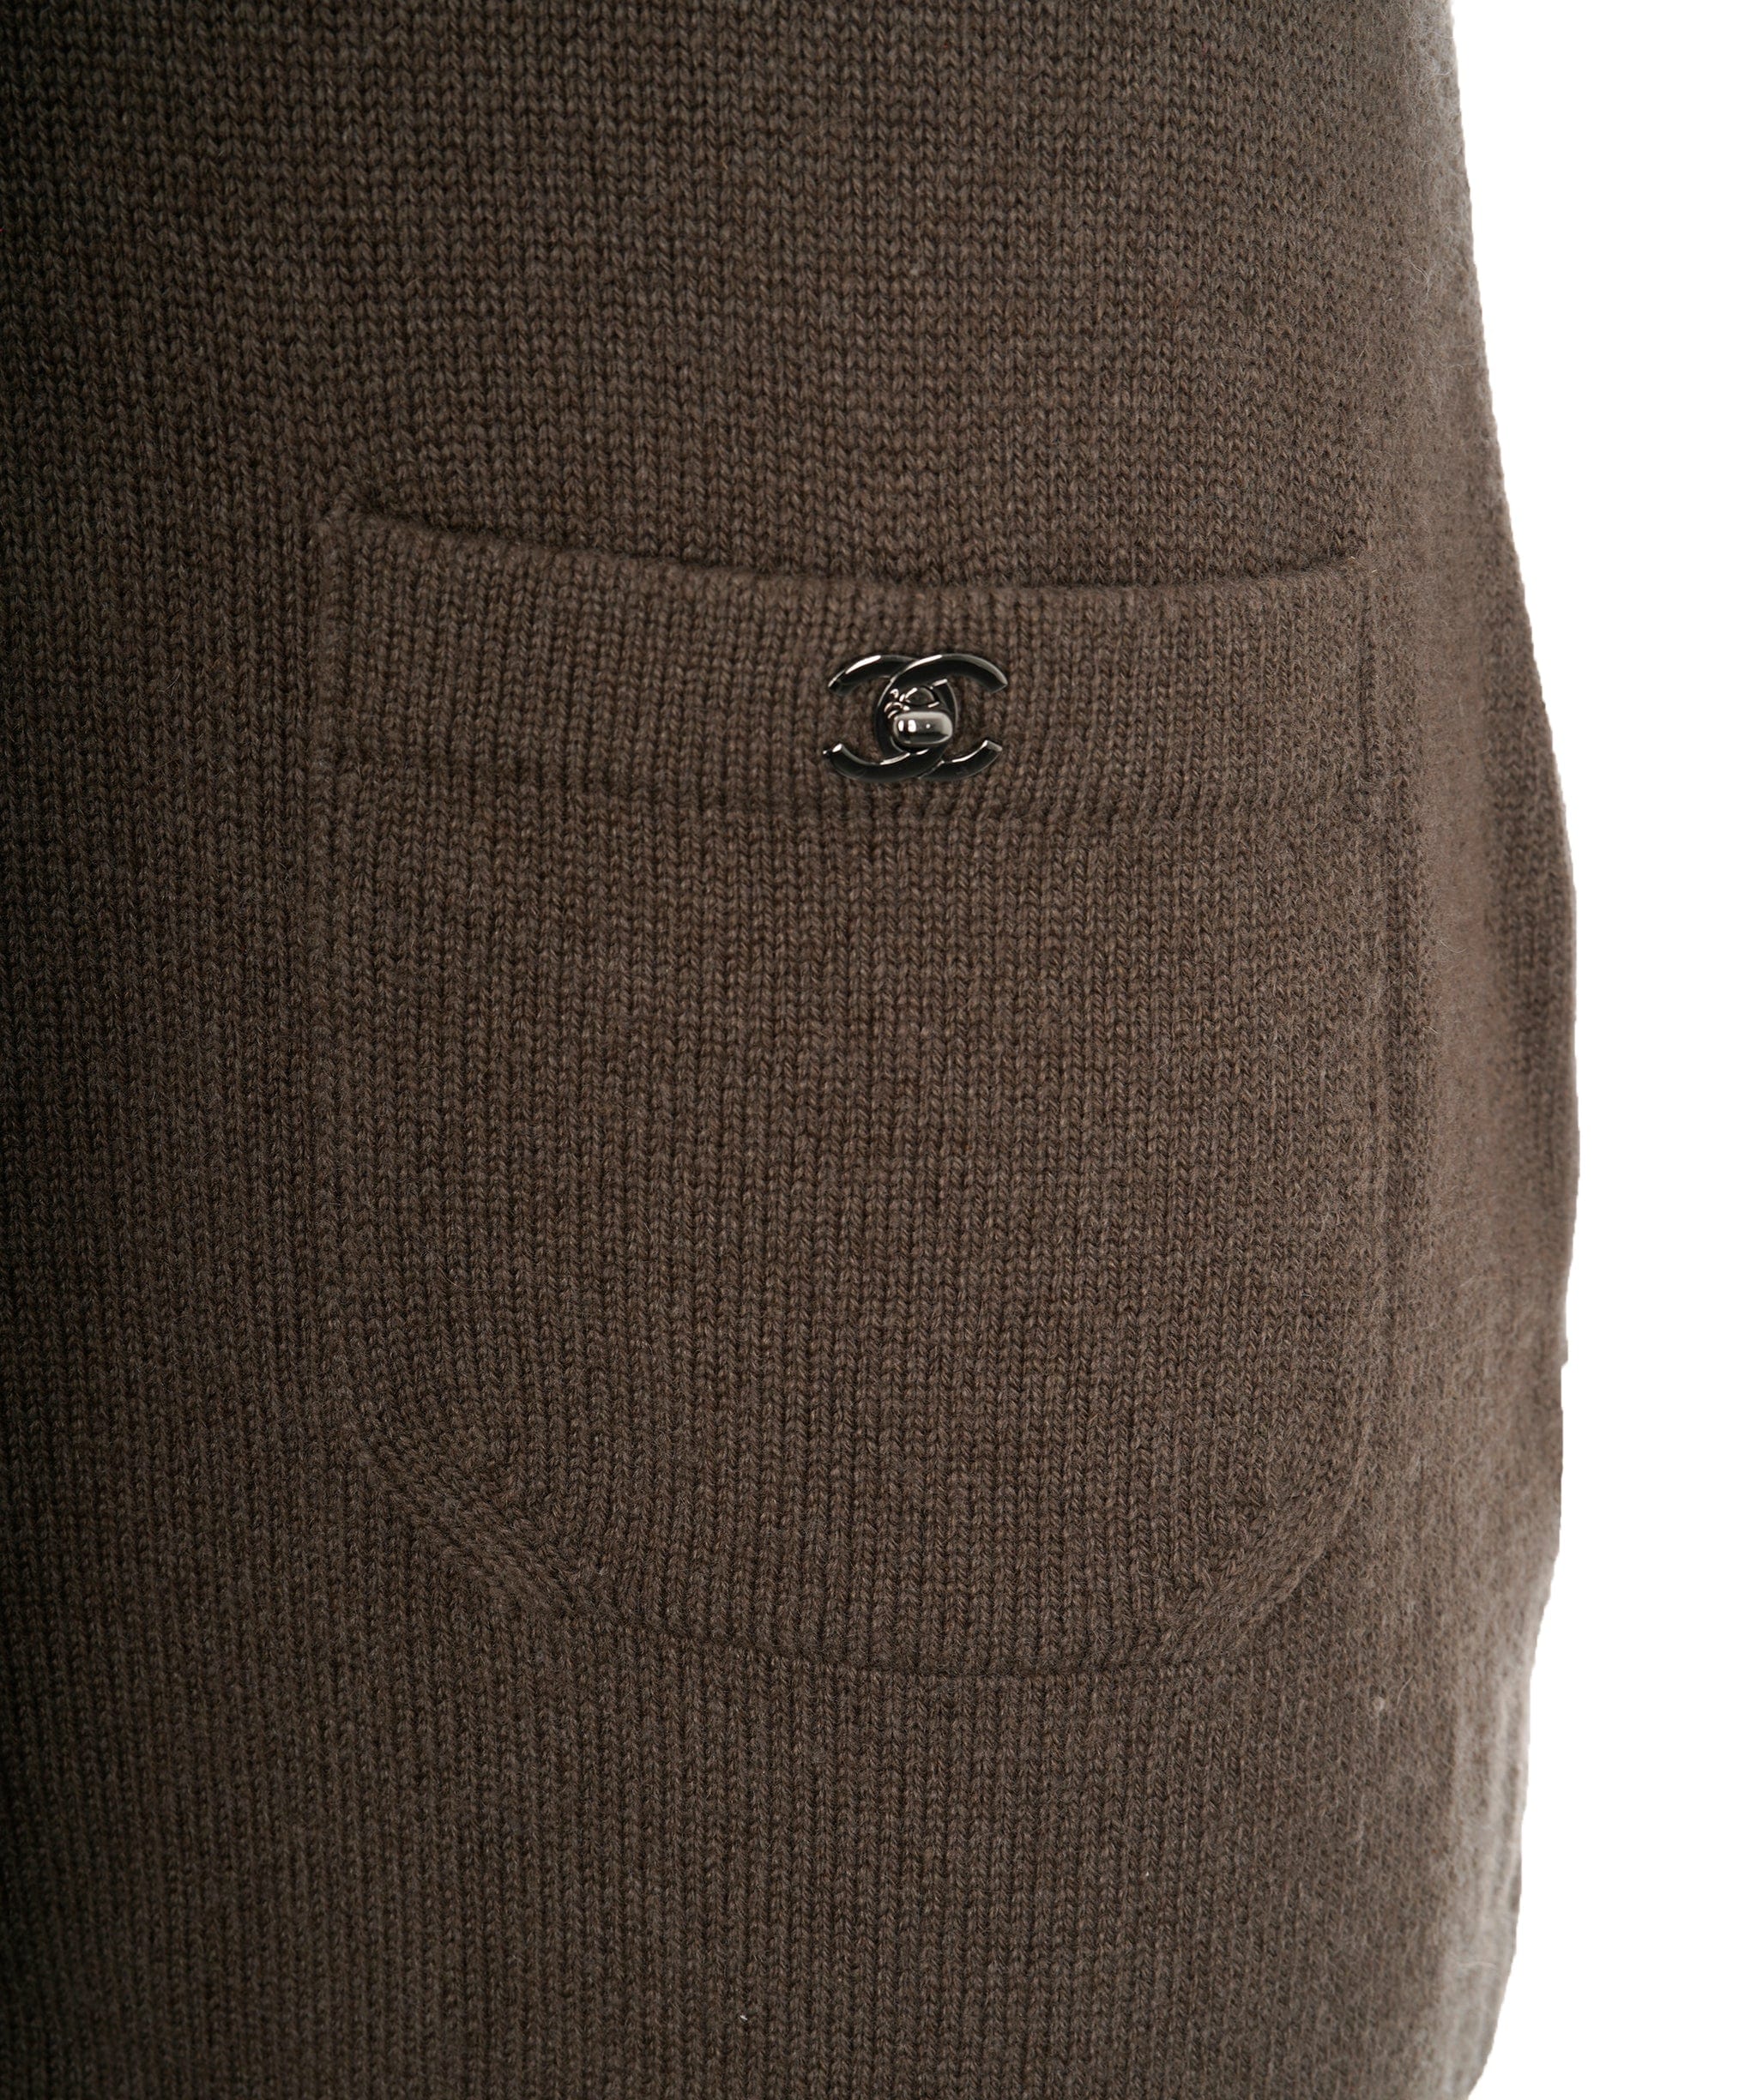 Chanel Chanel grey dress cc buttons FR38 P41977K03185 AVC1972